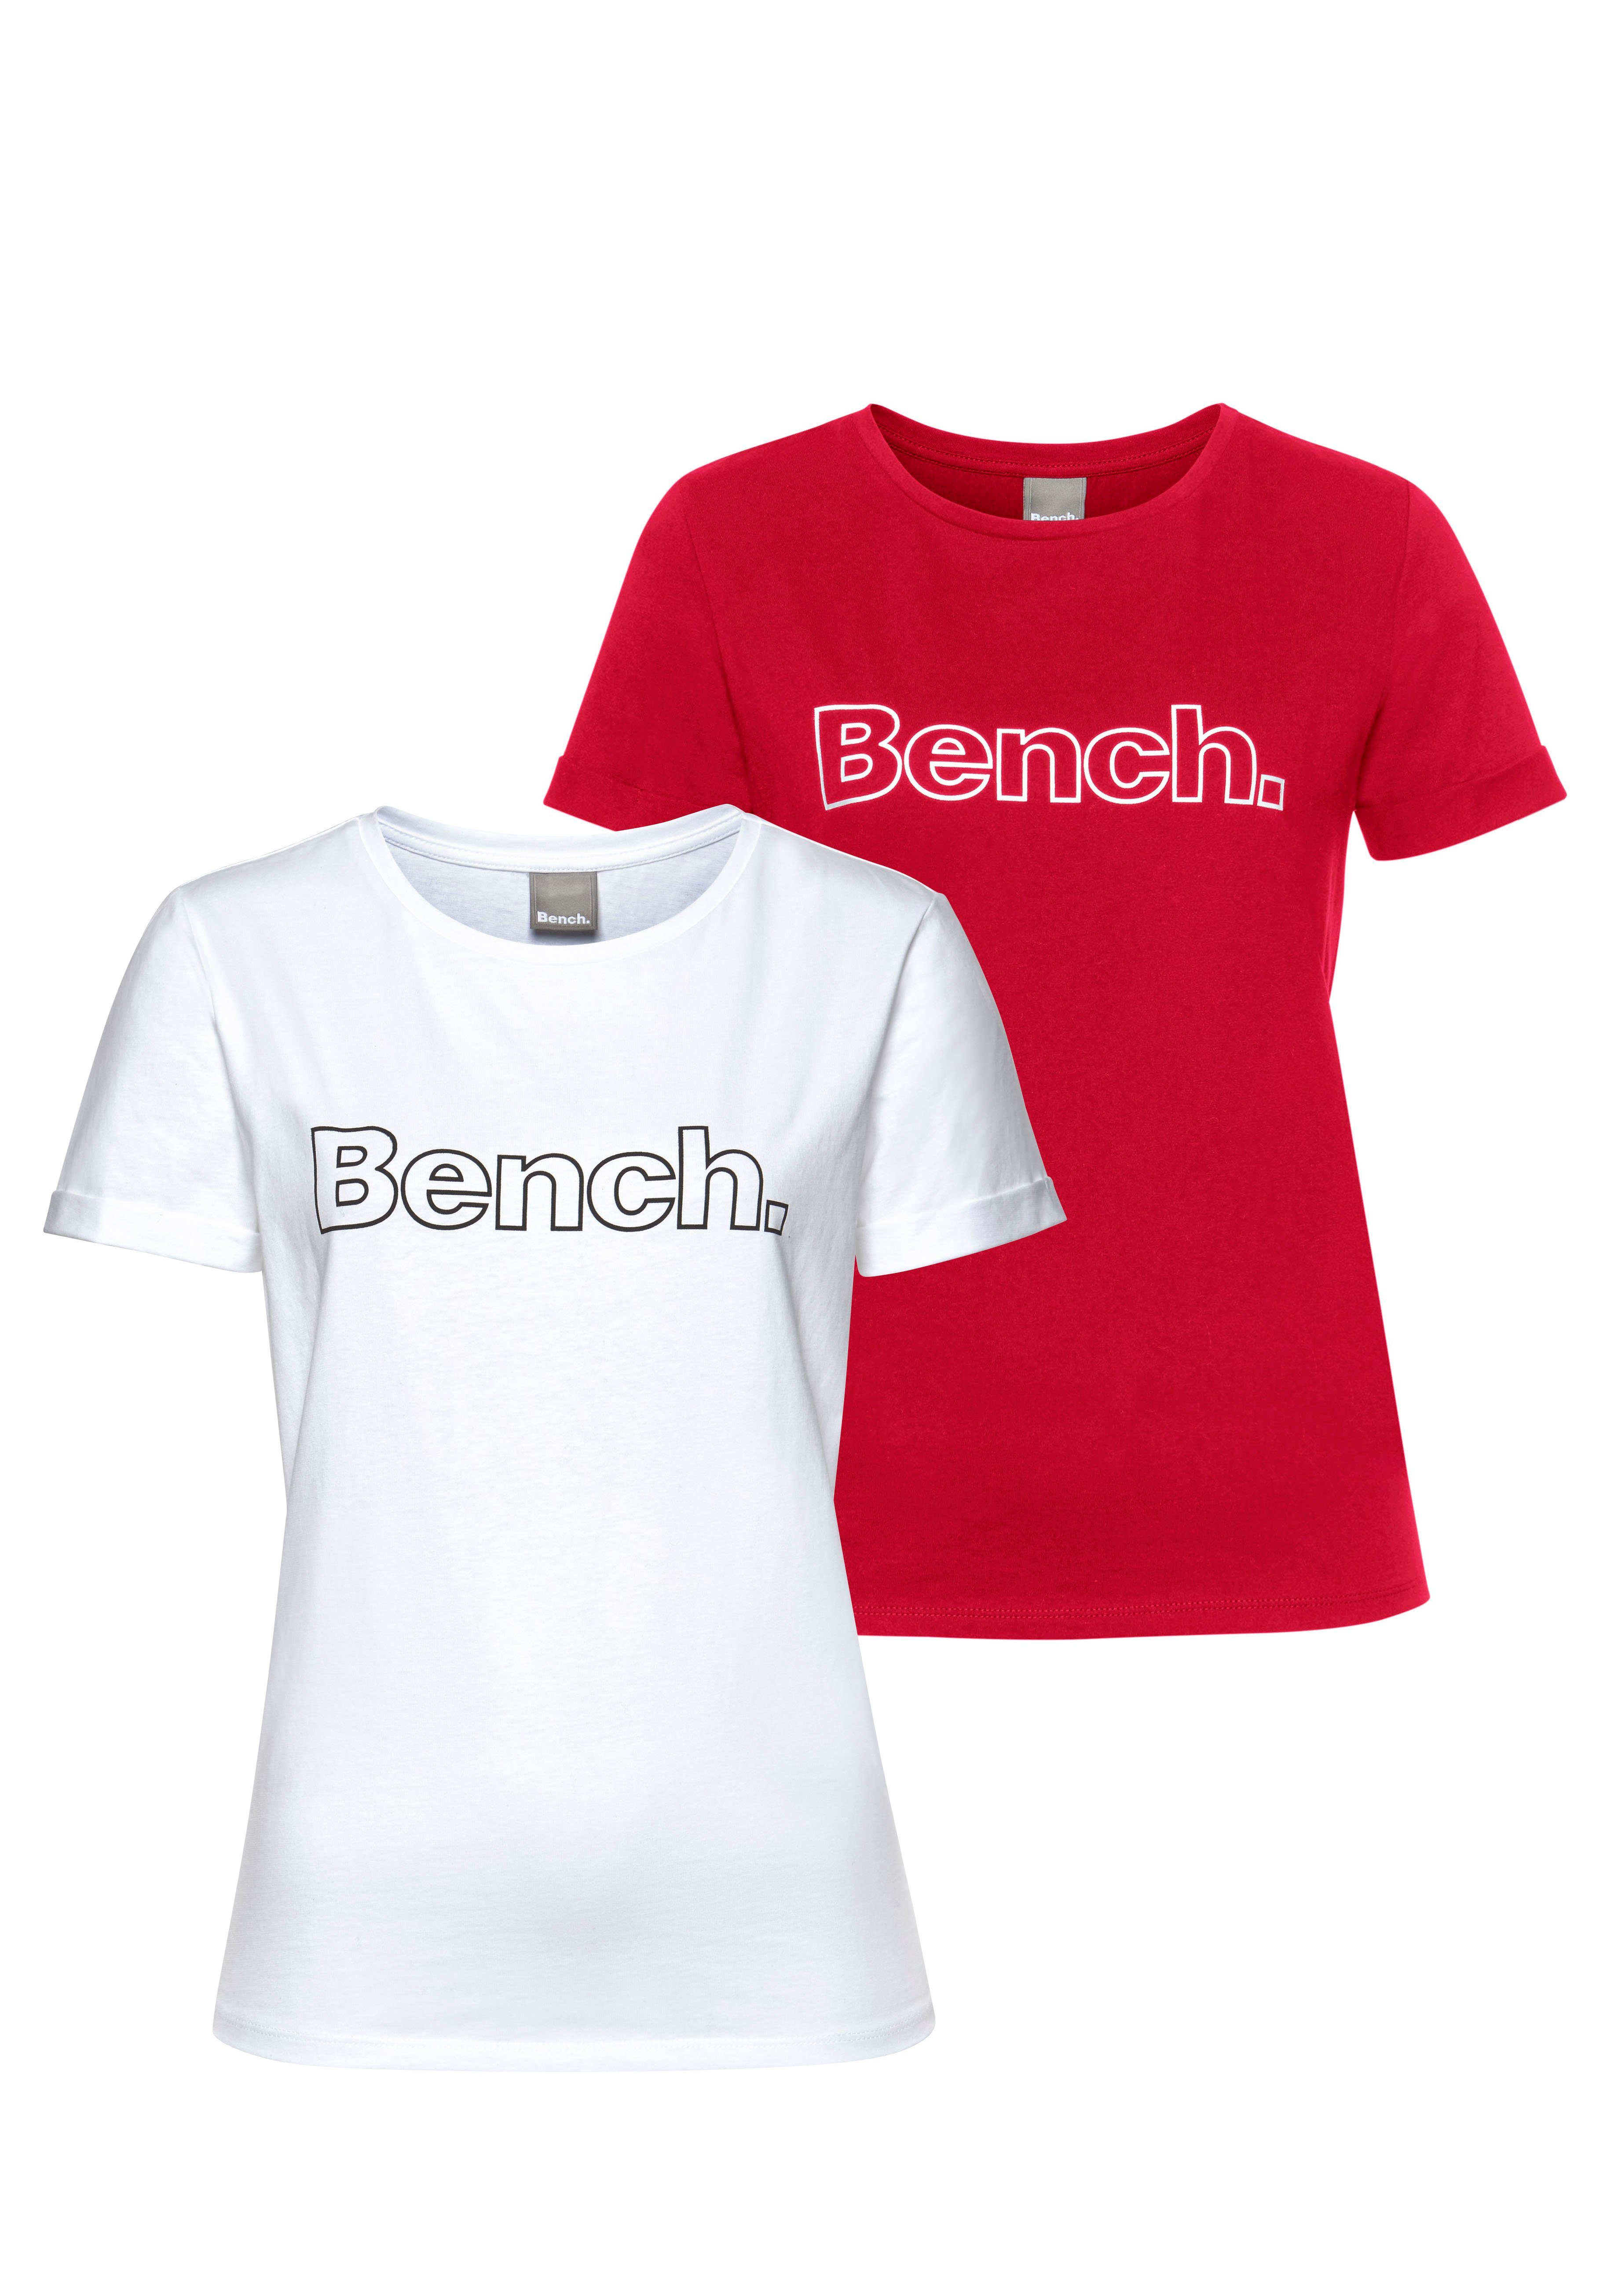 Rotes T-Shirt online kaufen | OTTO